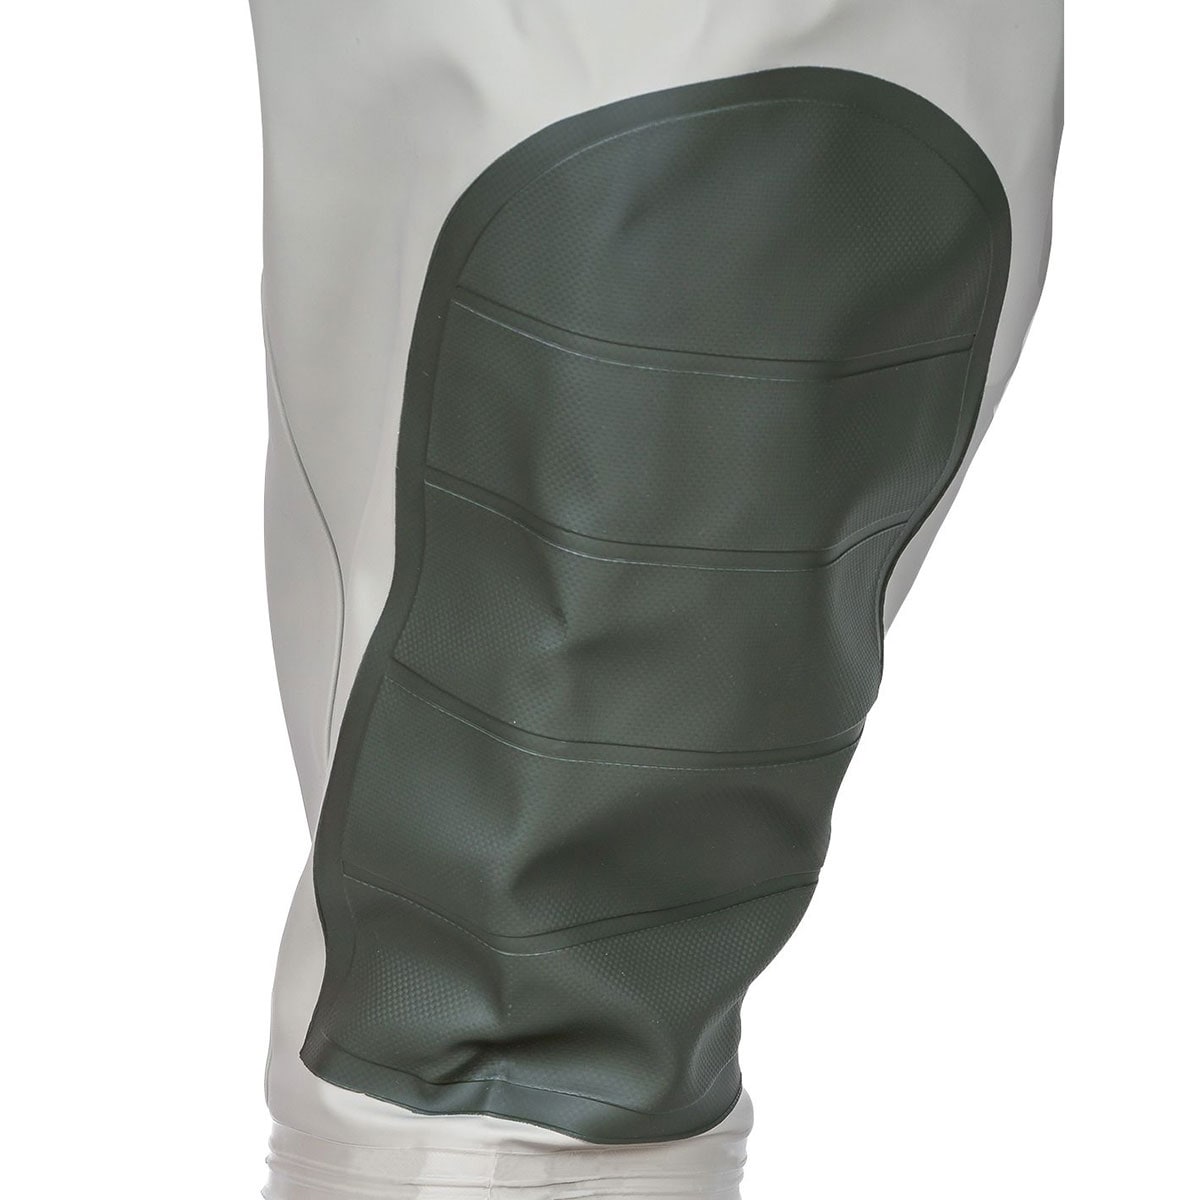 Spodniobuty Pros Premium - Beige/Olive